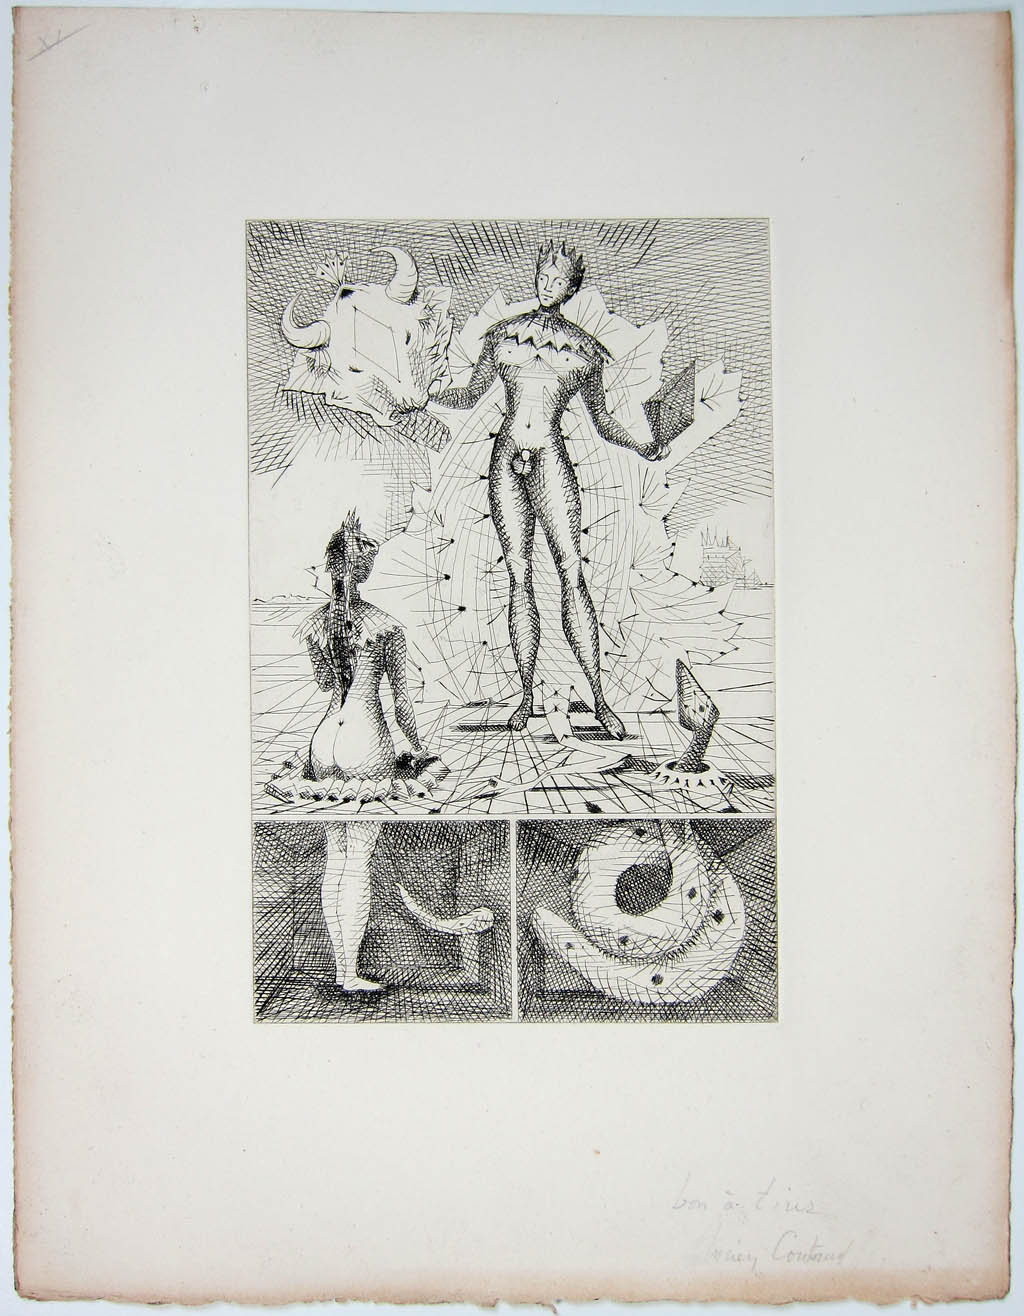 Lucien Coutaud - Le Taureau Blanc (Plate XI) - 1956 etching